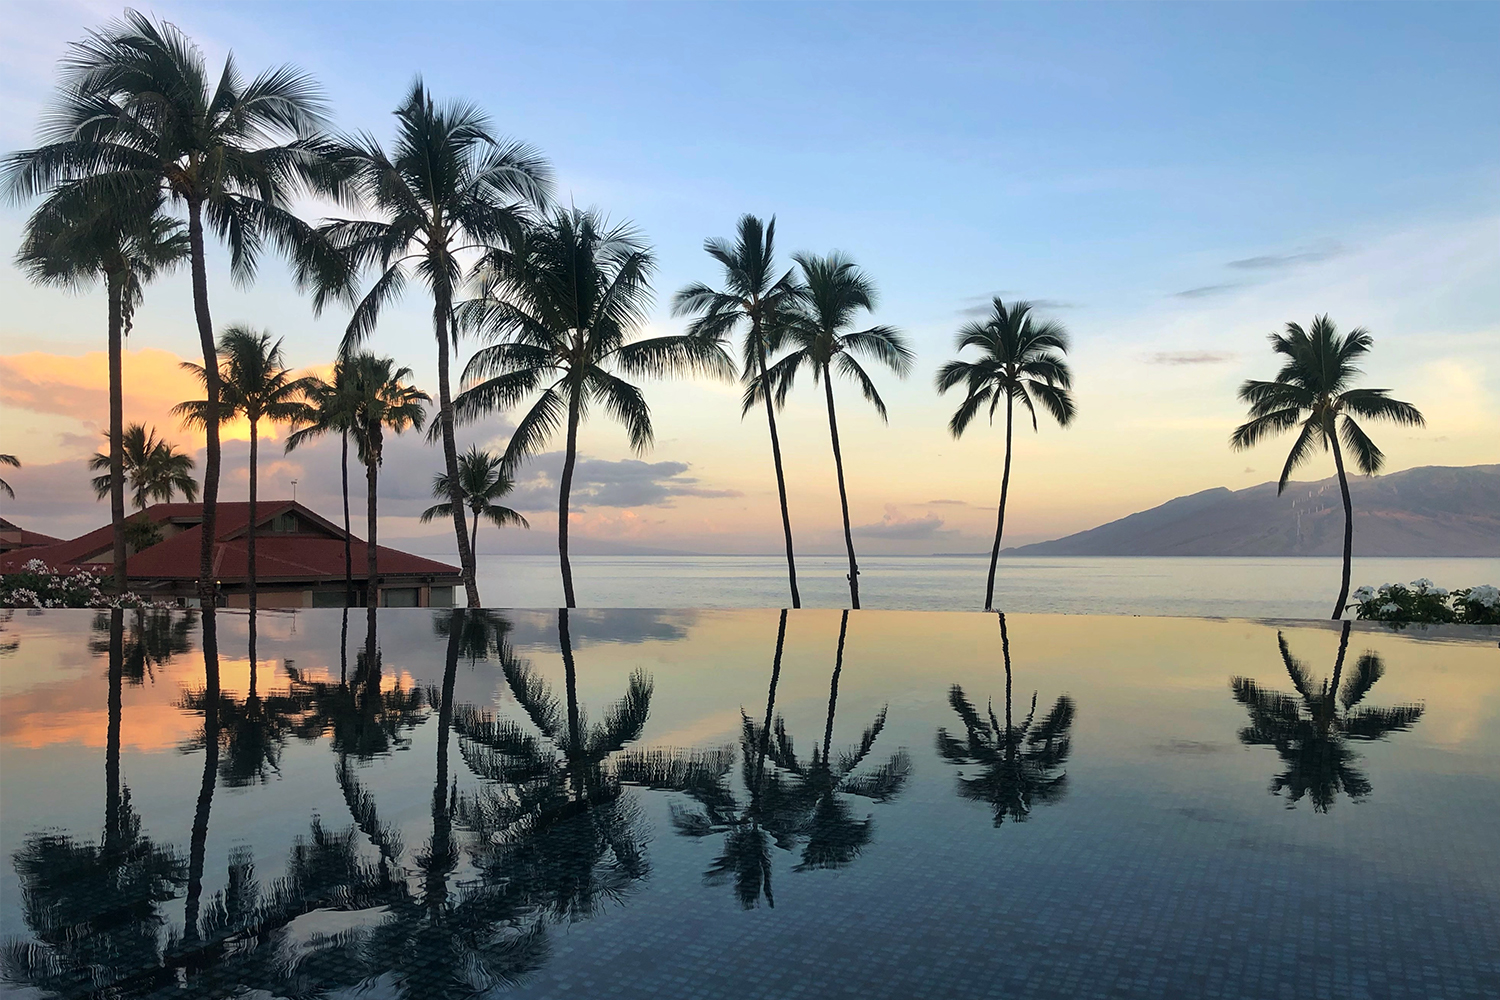 The pool at Four Seasons  Resort Maui at Wailea